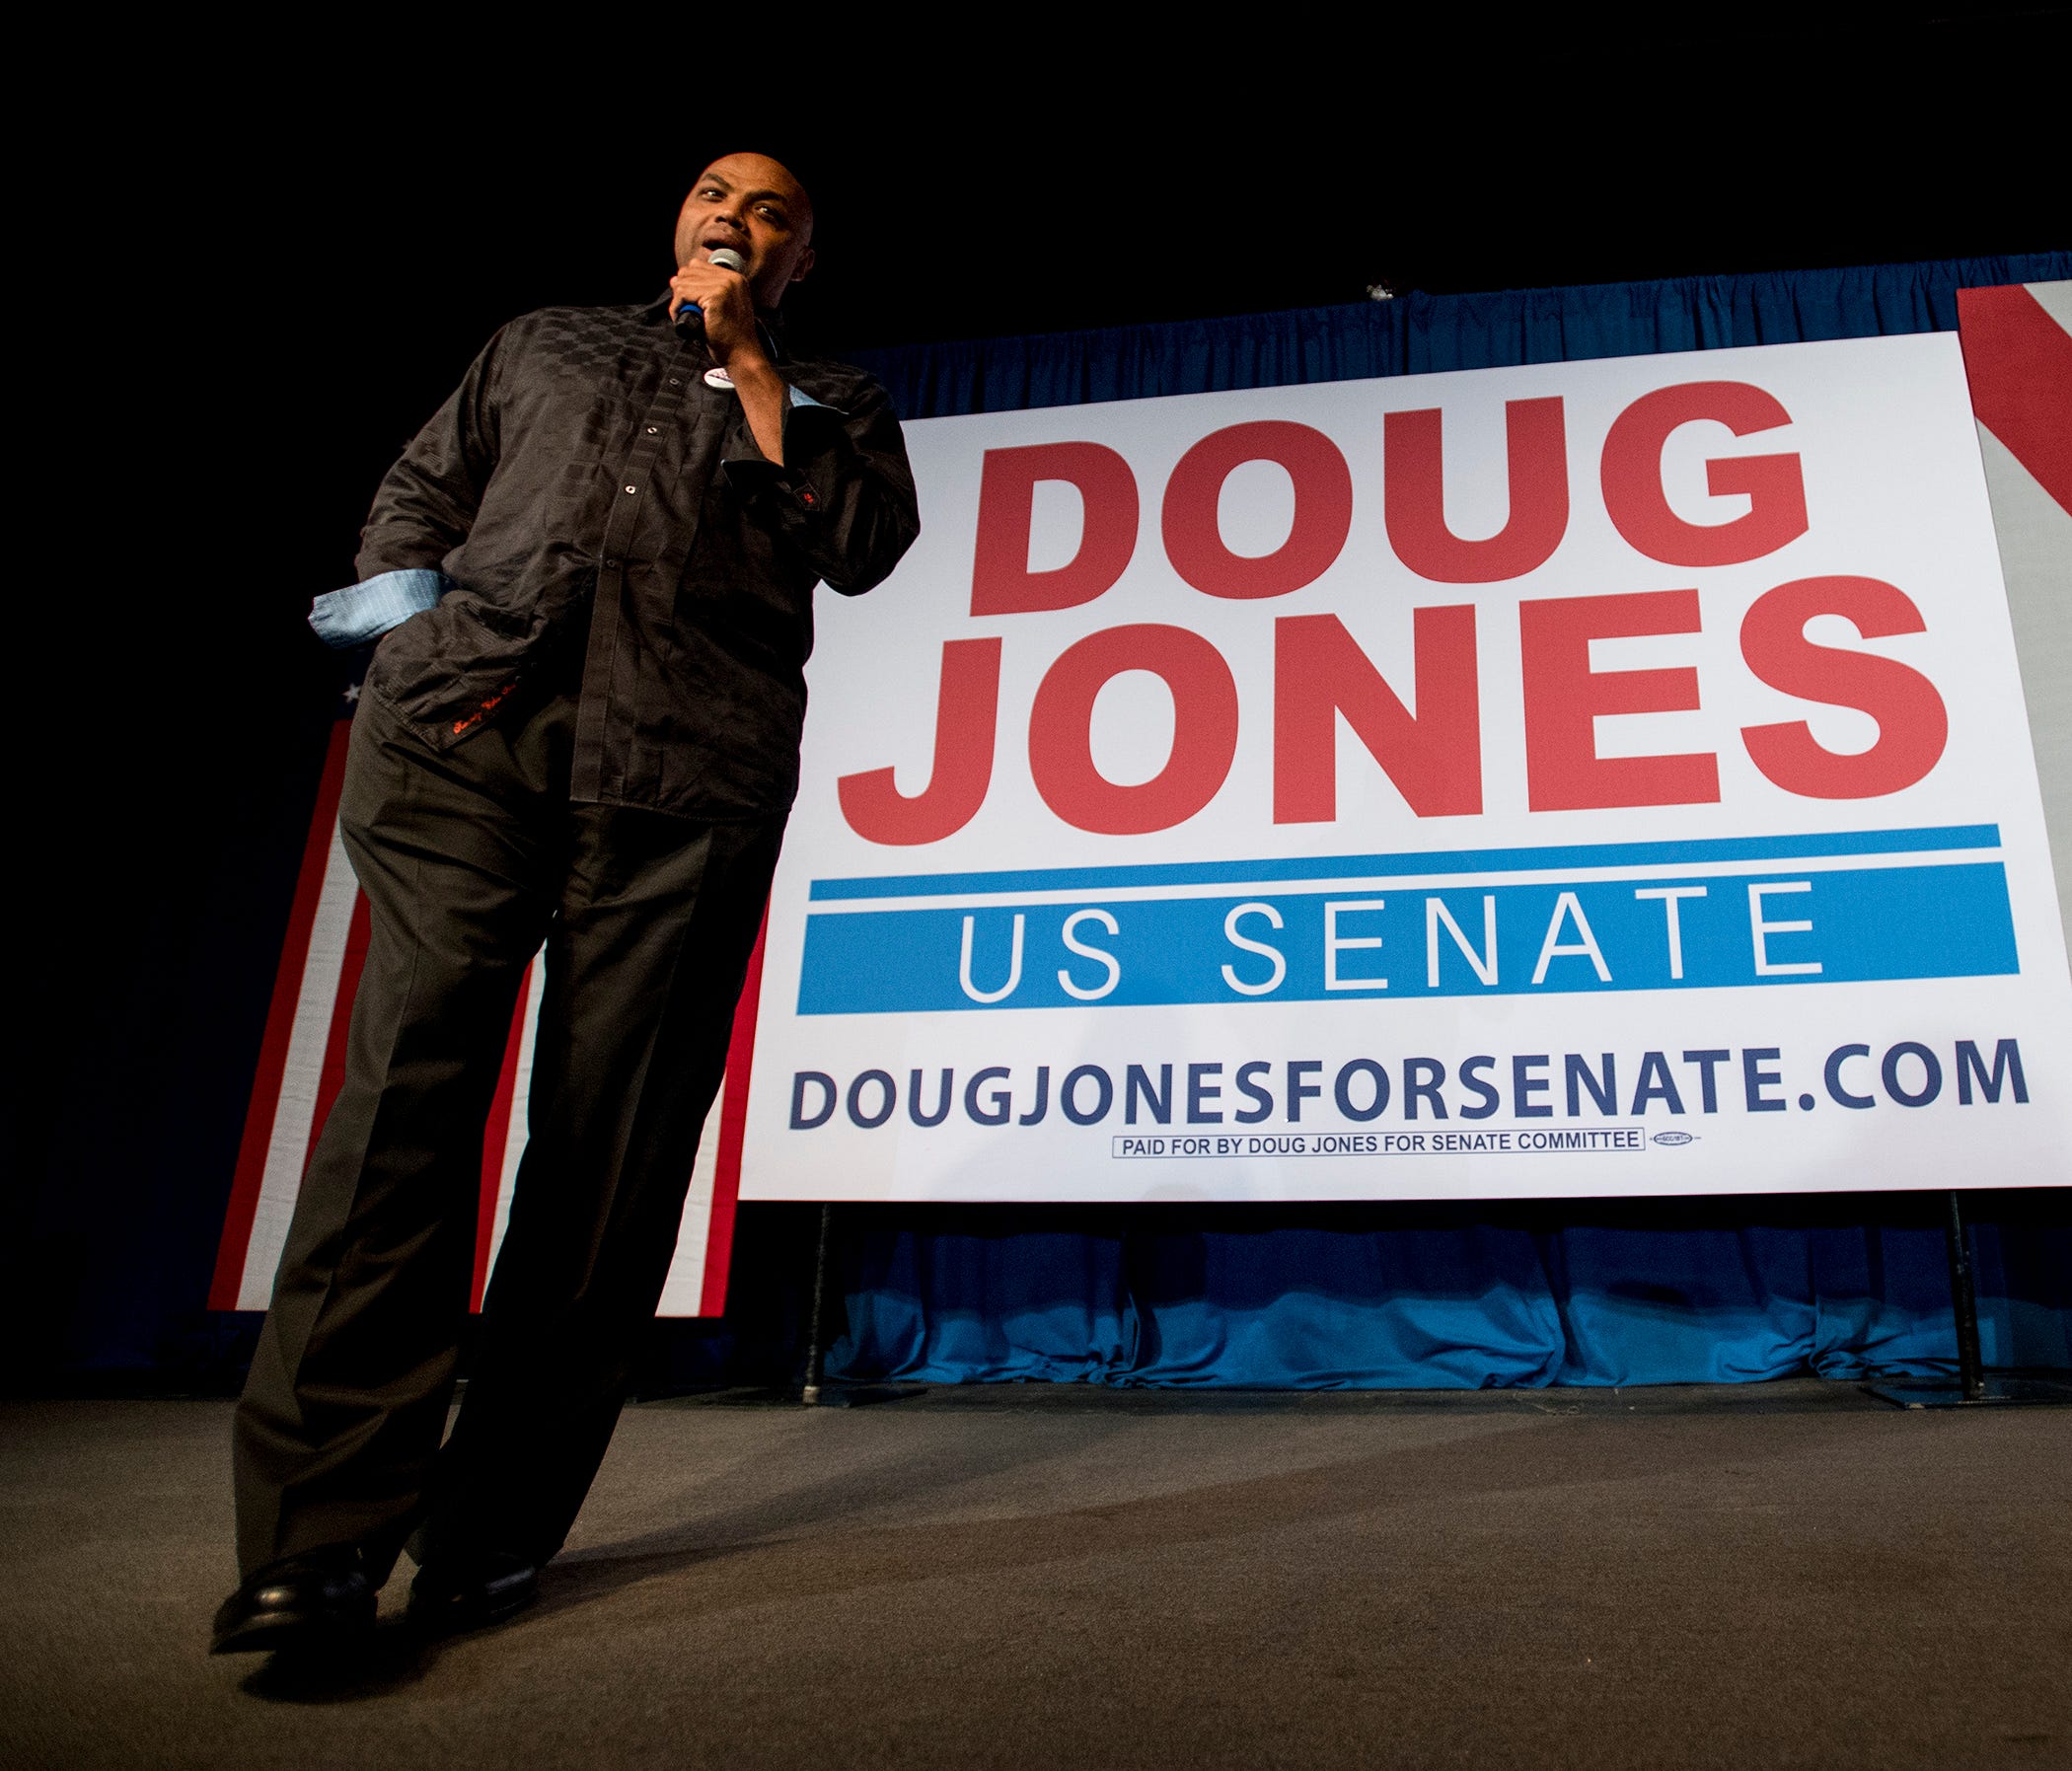 Charles Barkley speaks at U.S. Senate candidate Doug Jones' rally in Birmingham, Ala. on Monday night December 11, 2017.